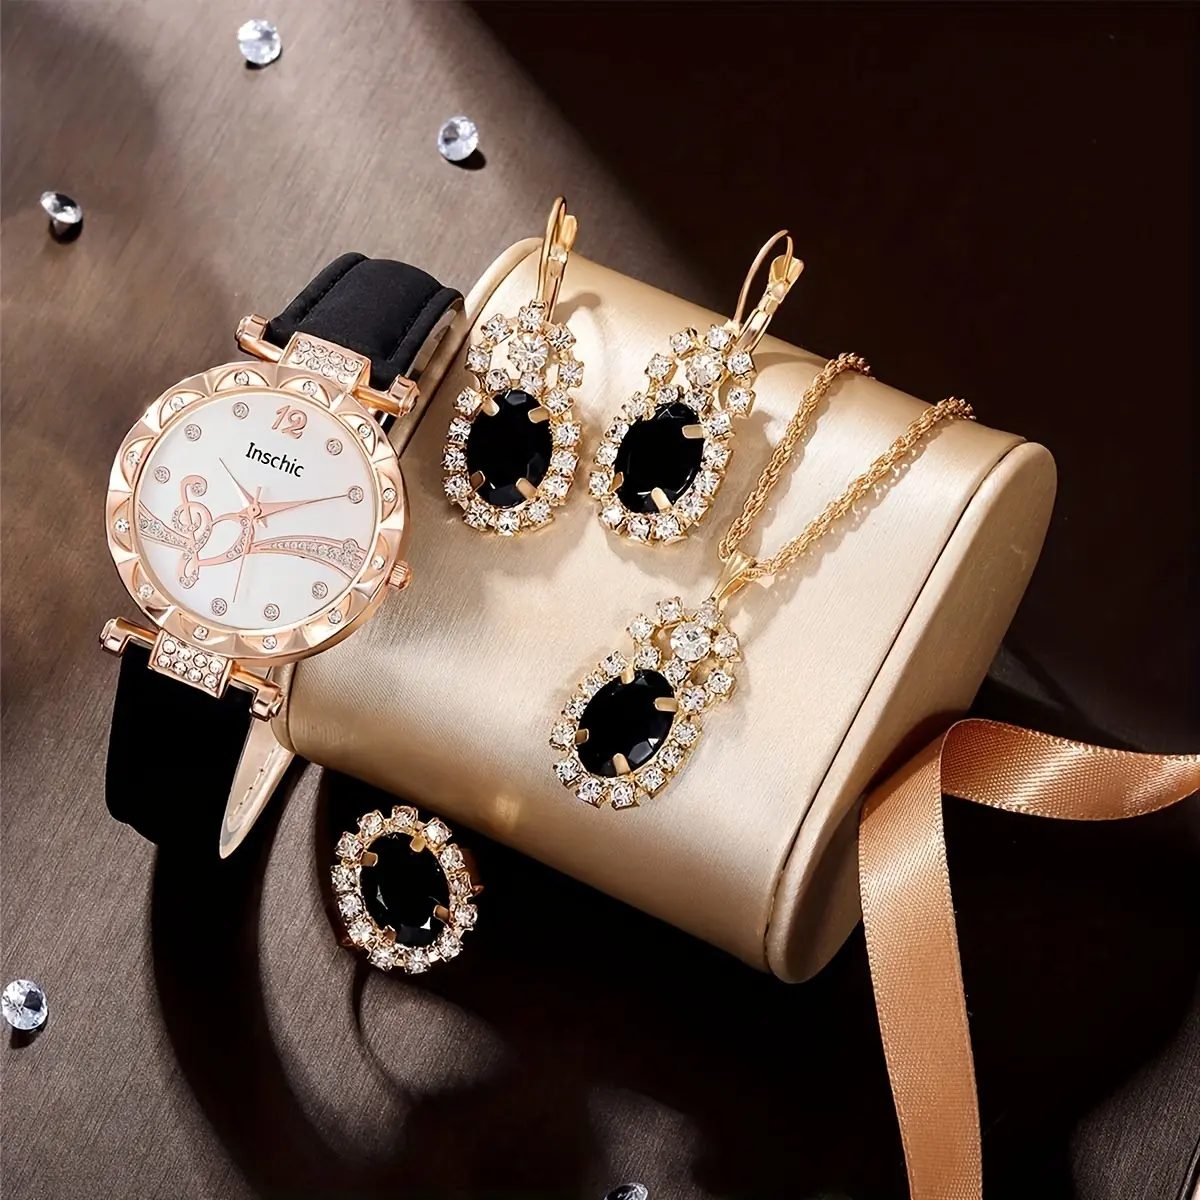 Jam tangan wanita, 6105 murah Pointer kuarsa jam tangan Analog Wanita Kulit & 4 buah perhiasan Set Kalung Anting untuk gaun